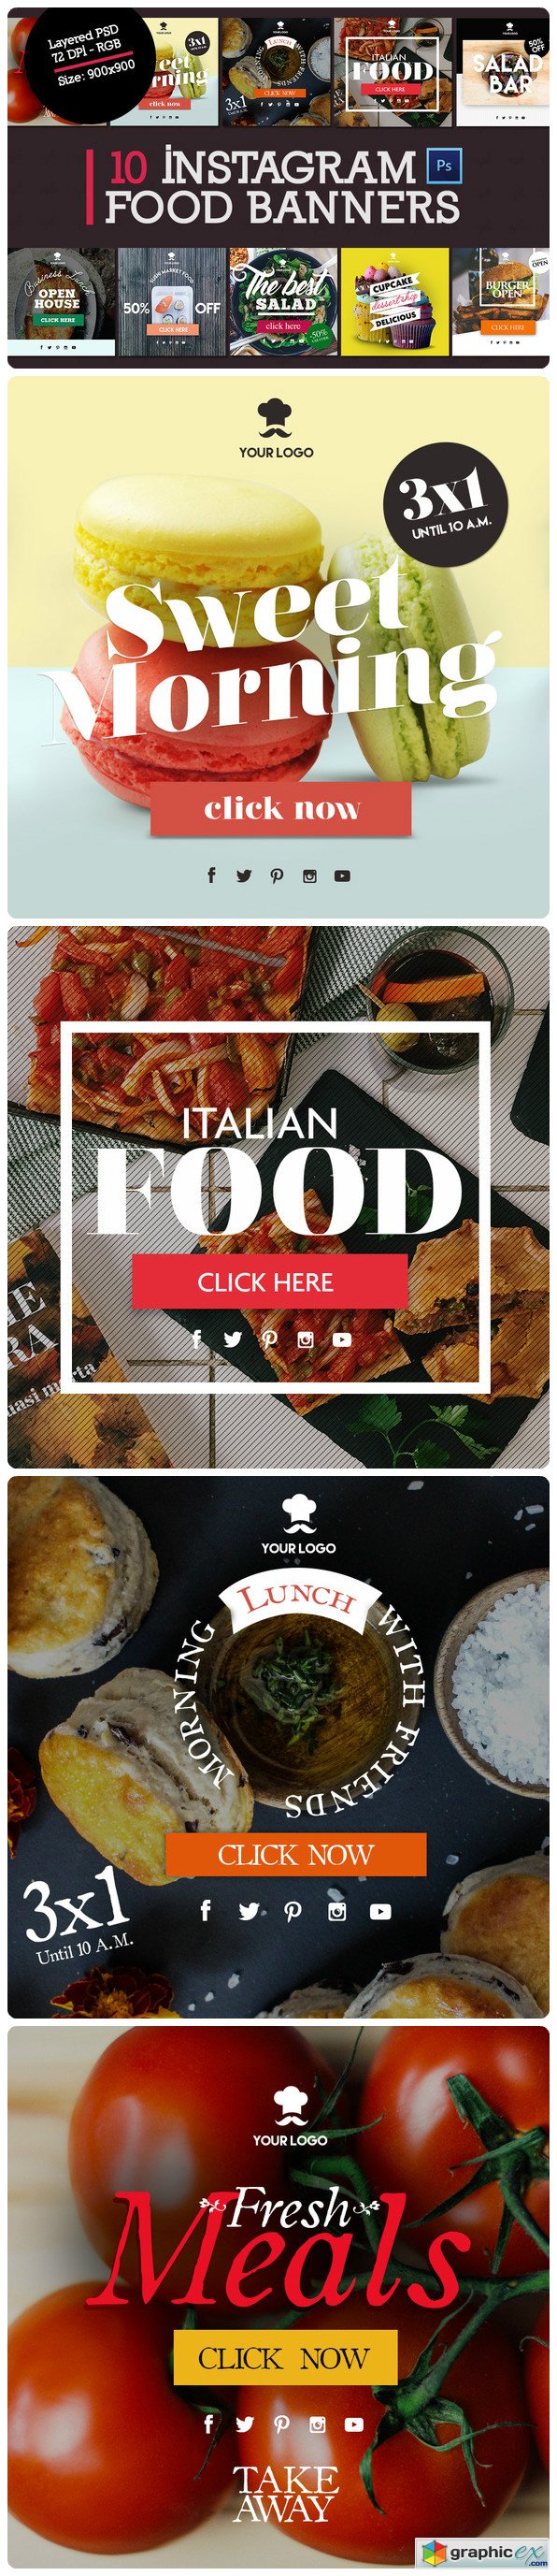 10 Instagram Food Banners